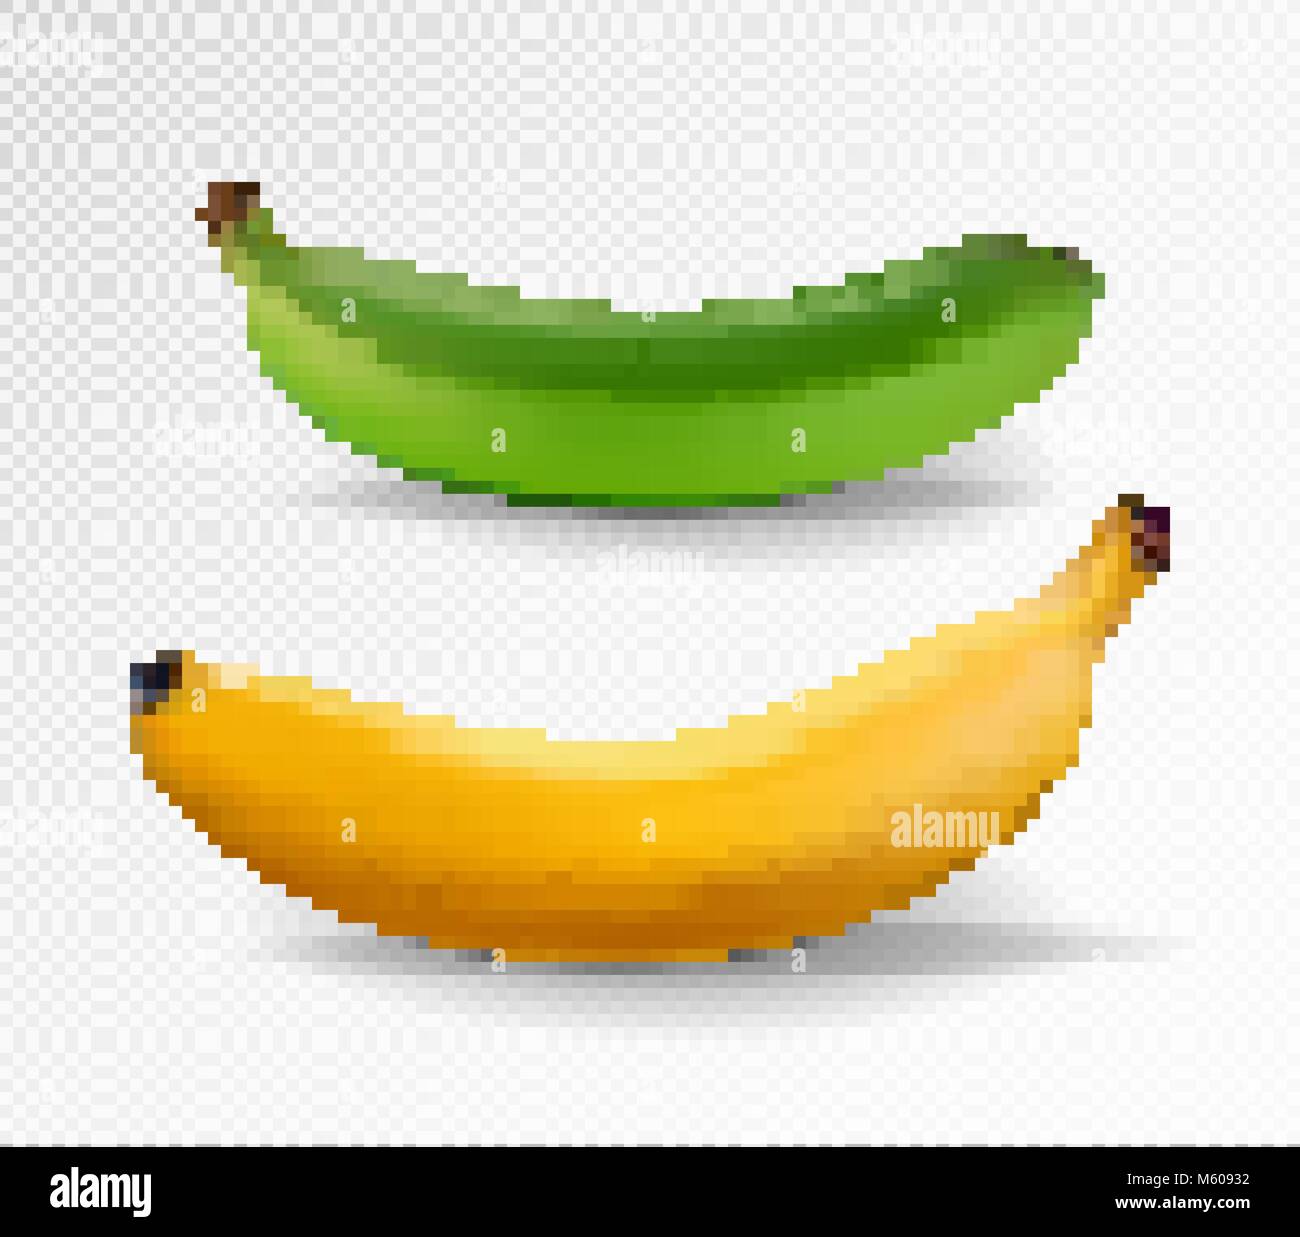 Banana Realistic Yellow And Green Banana Vector Illustration On